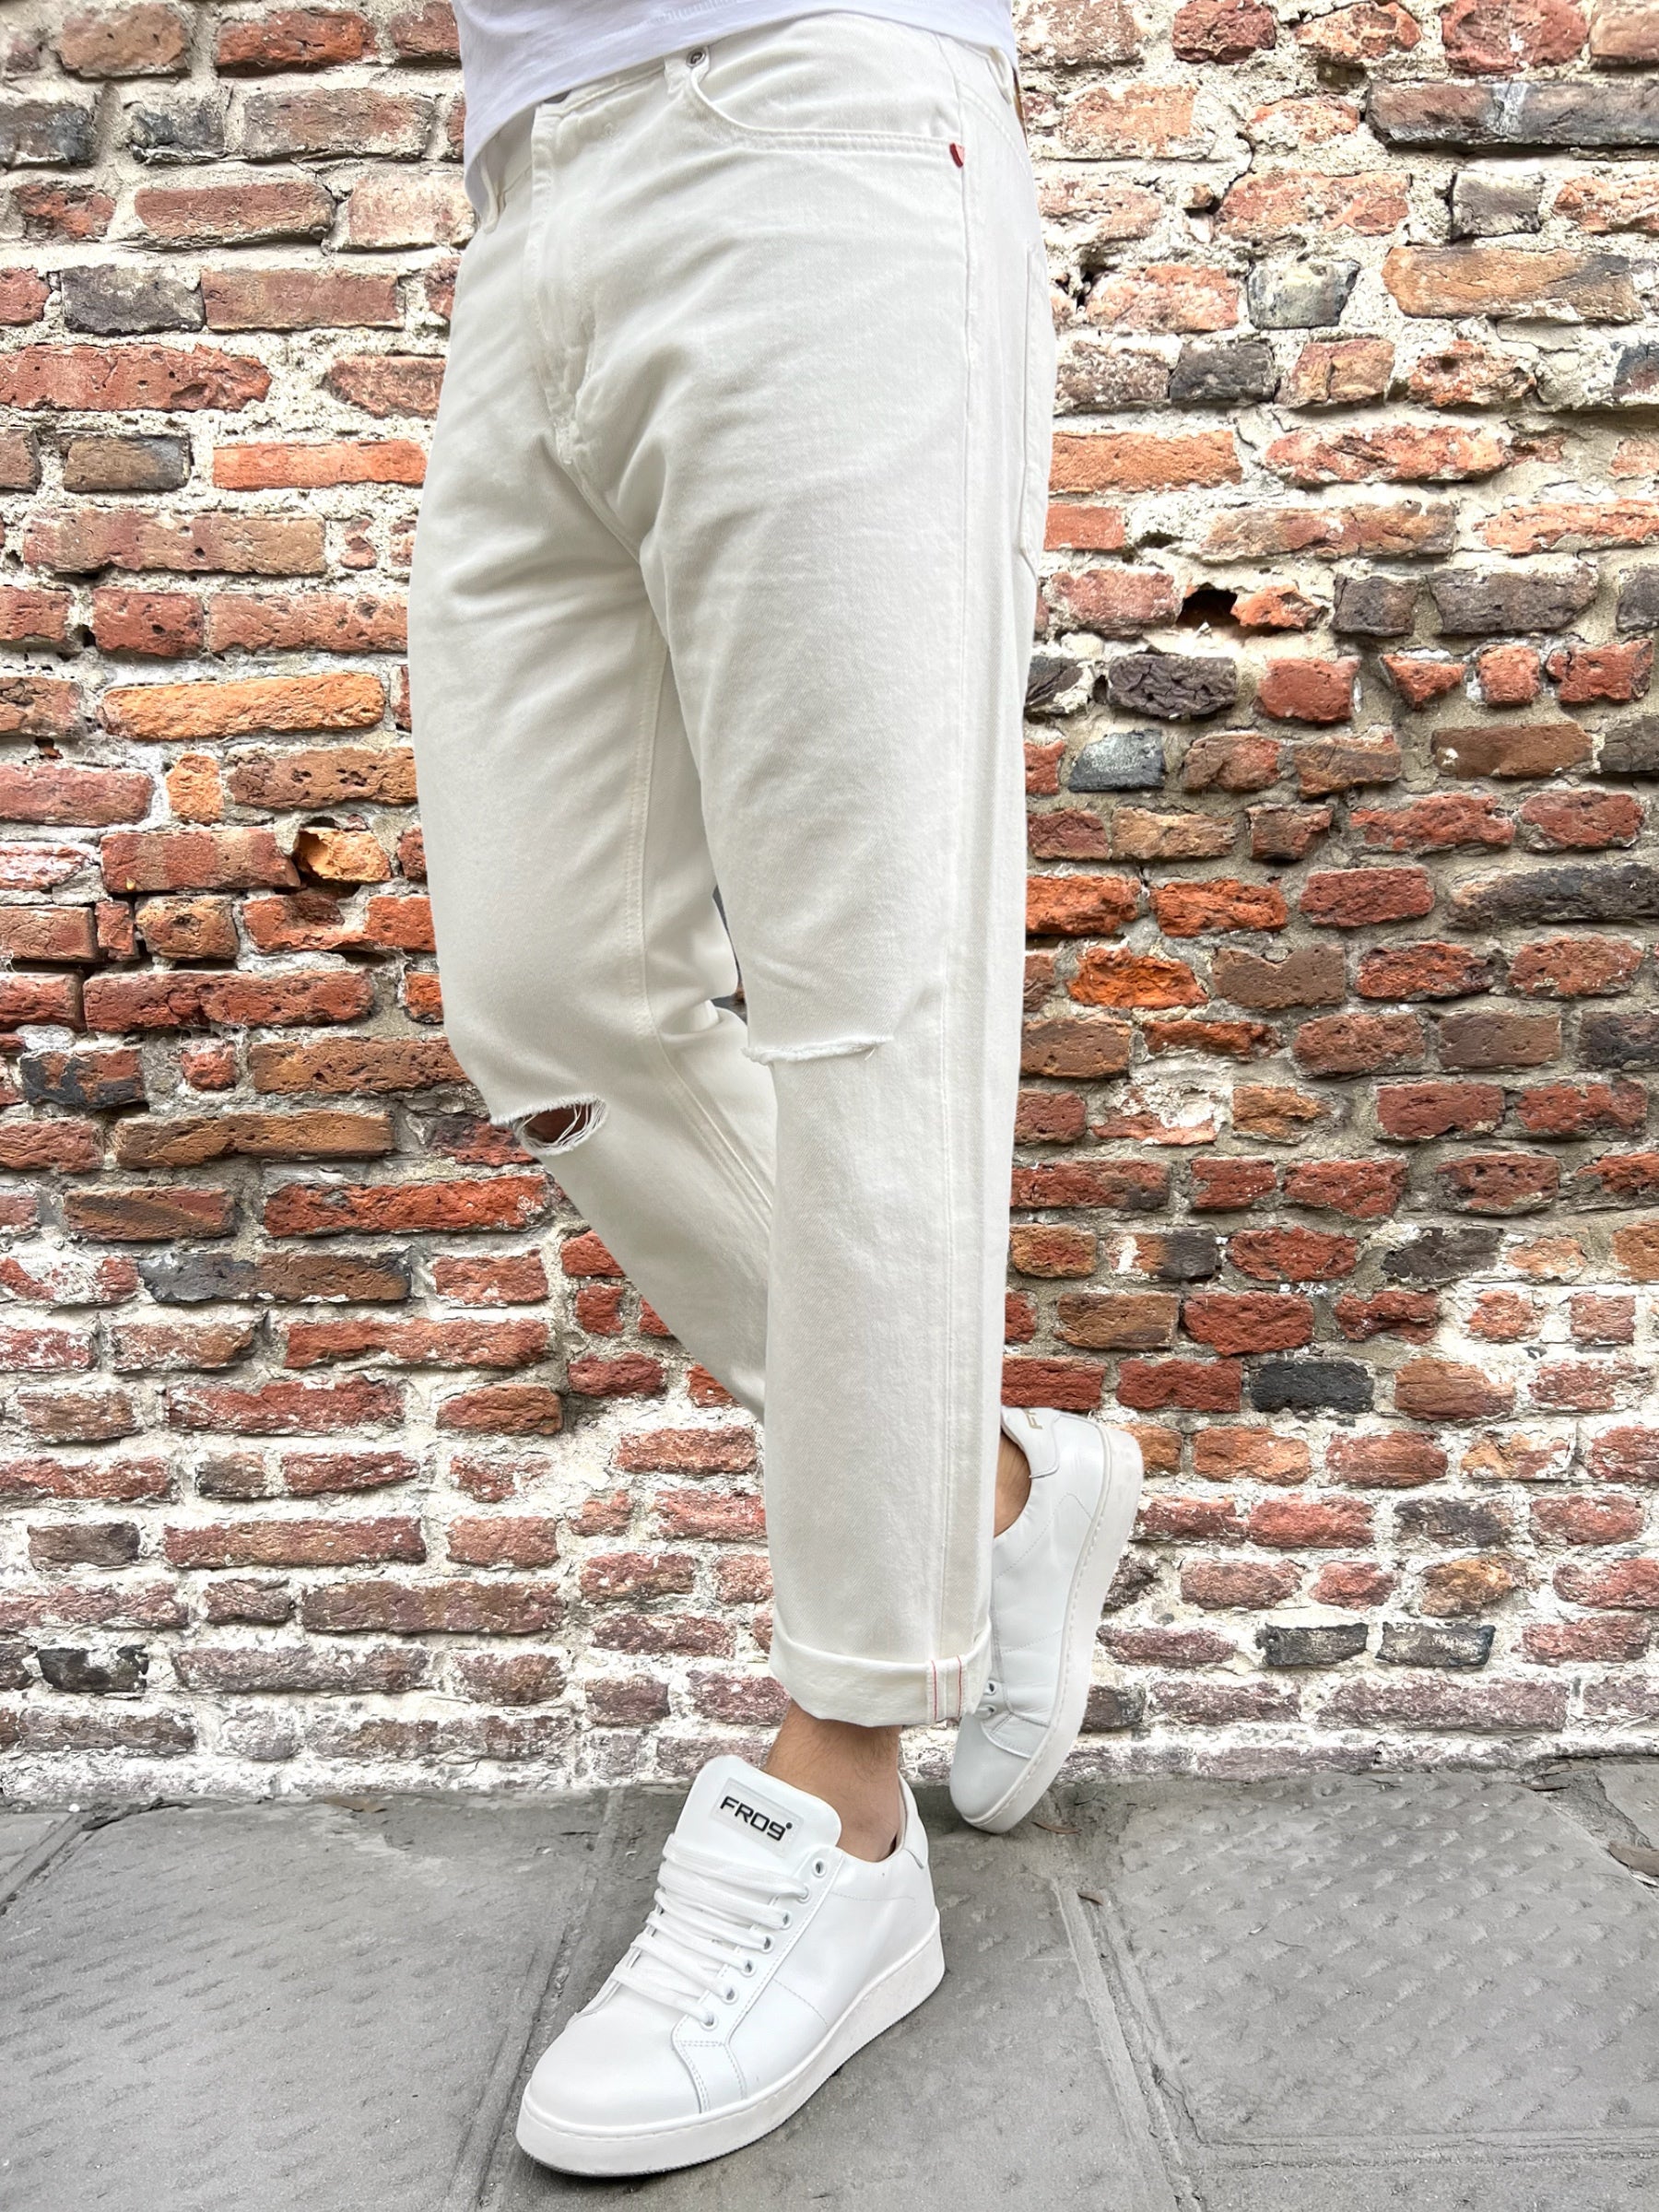 Pantalone Gianni Lupo Bianco 6279 (9057379352916)